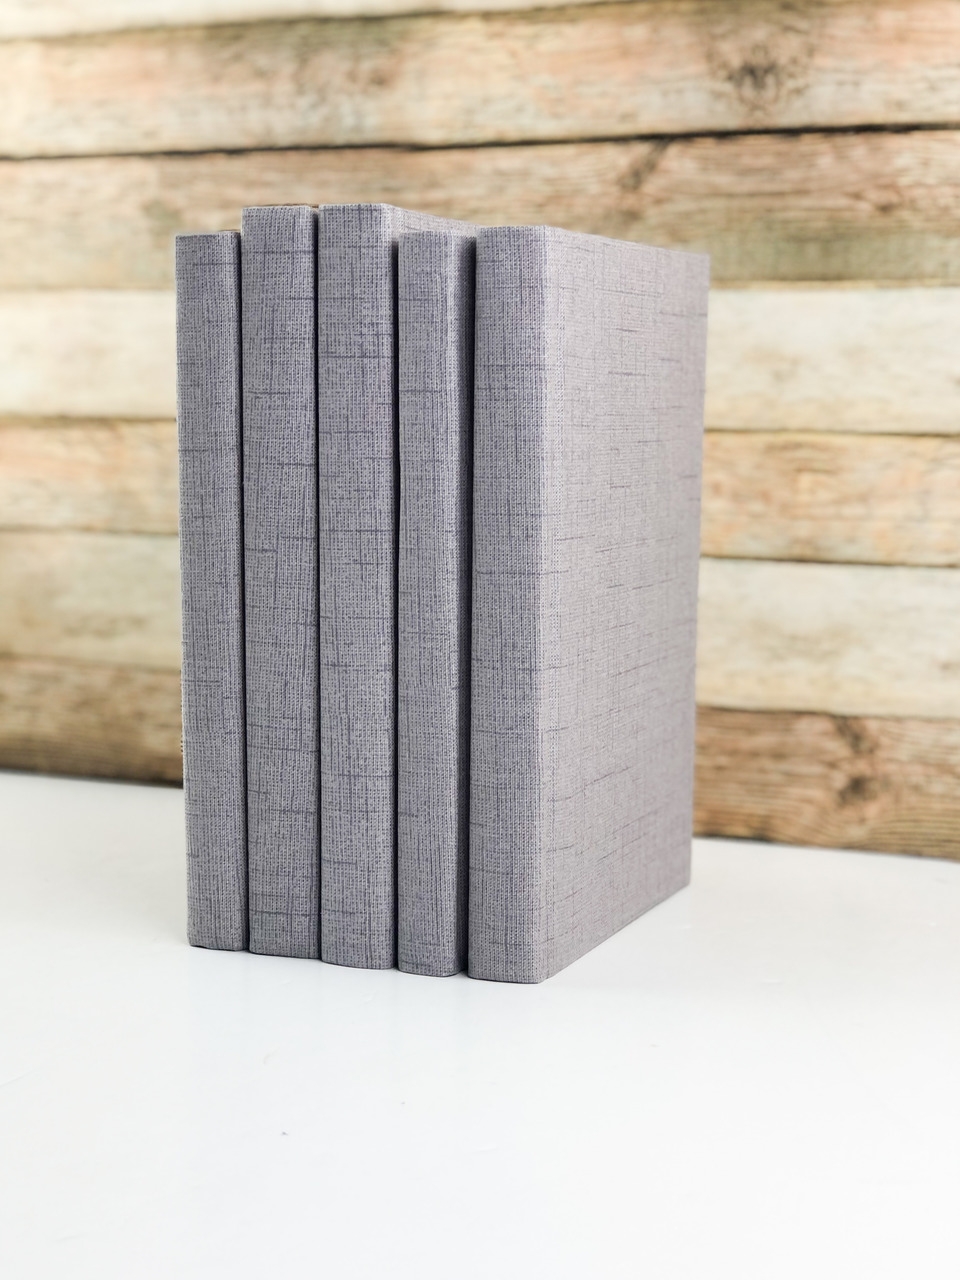 Decorative Books, Textured Gray, Set of 5 - Image 2